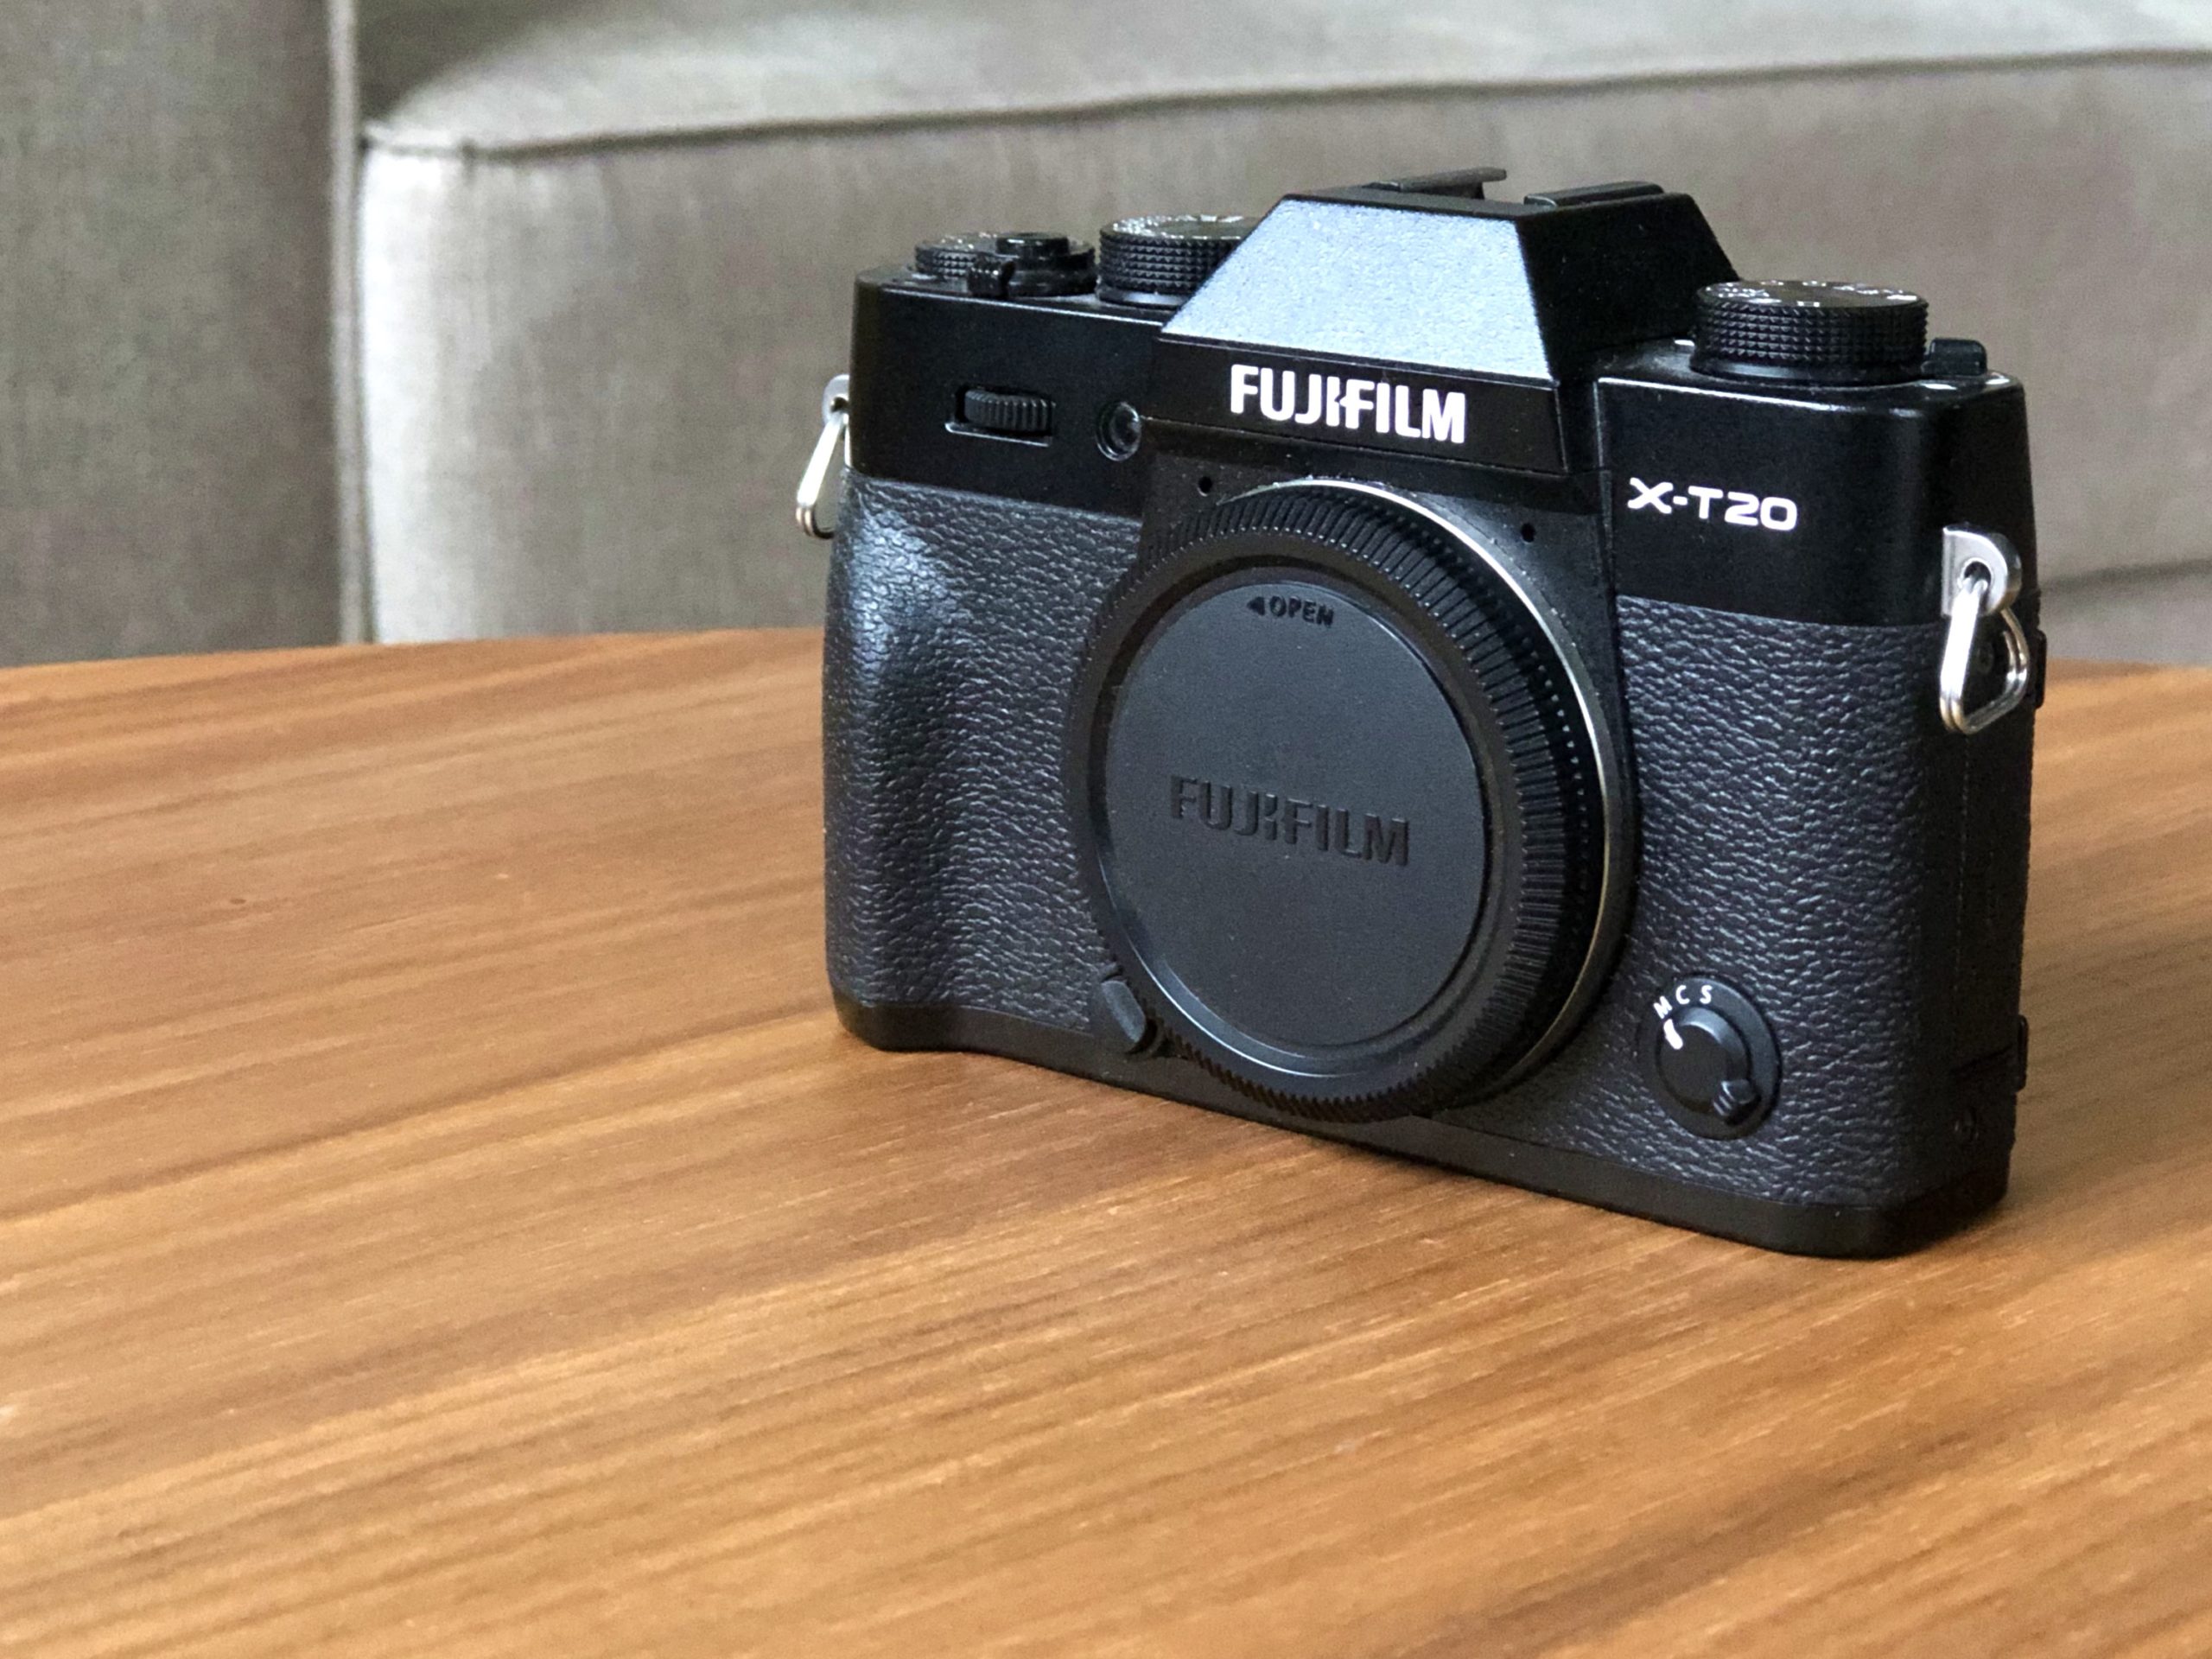 Fujifilm X-T20 camera